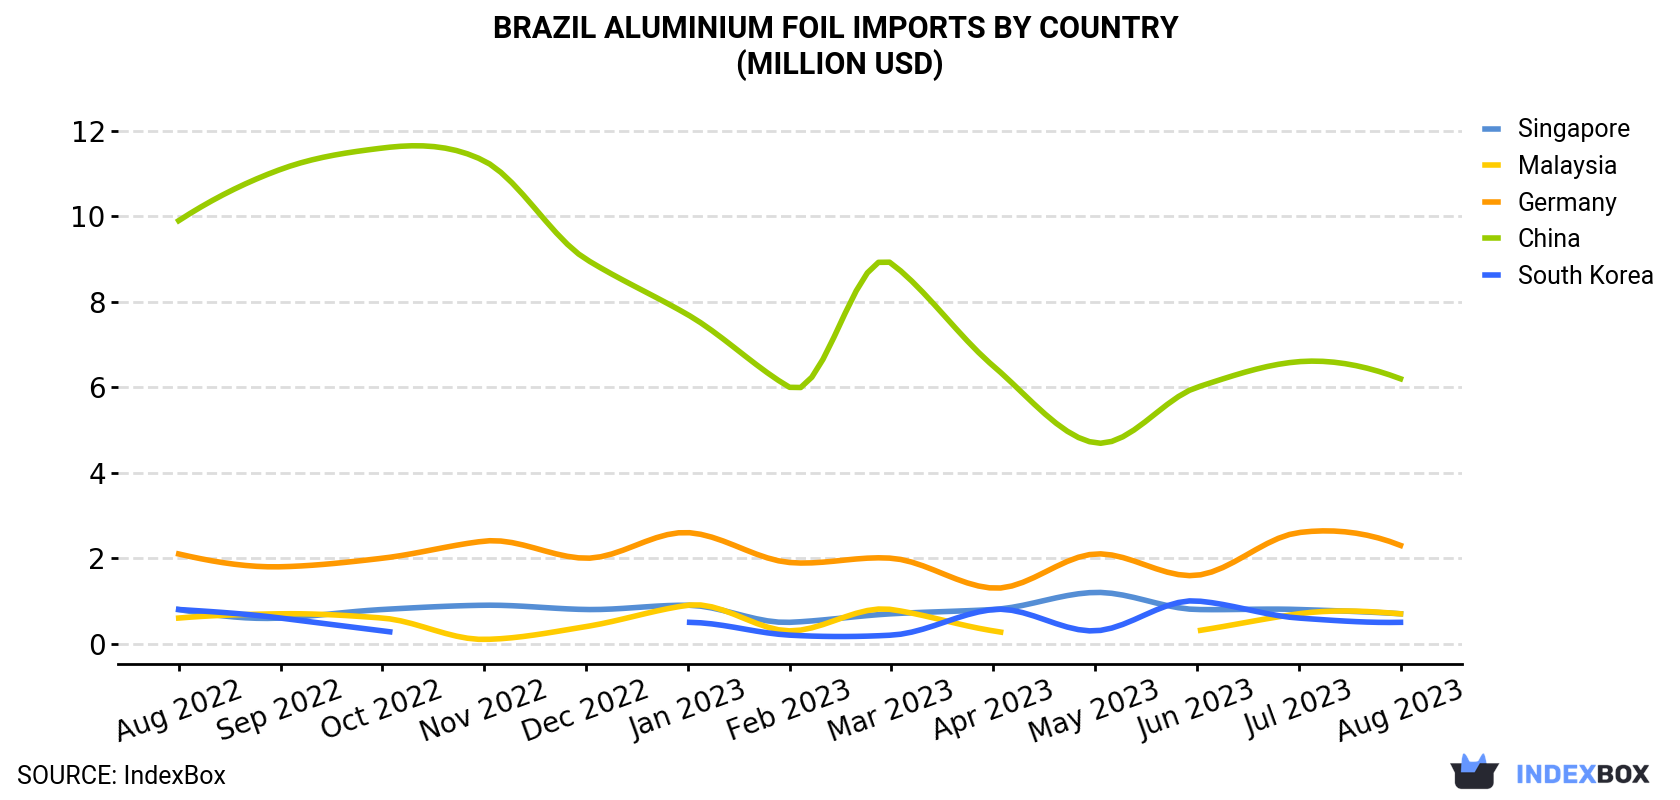 Brazil Aluminium Foil Imports By Country (Million USD)